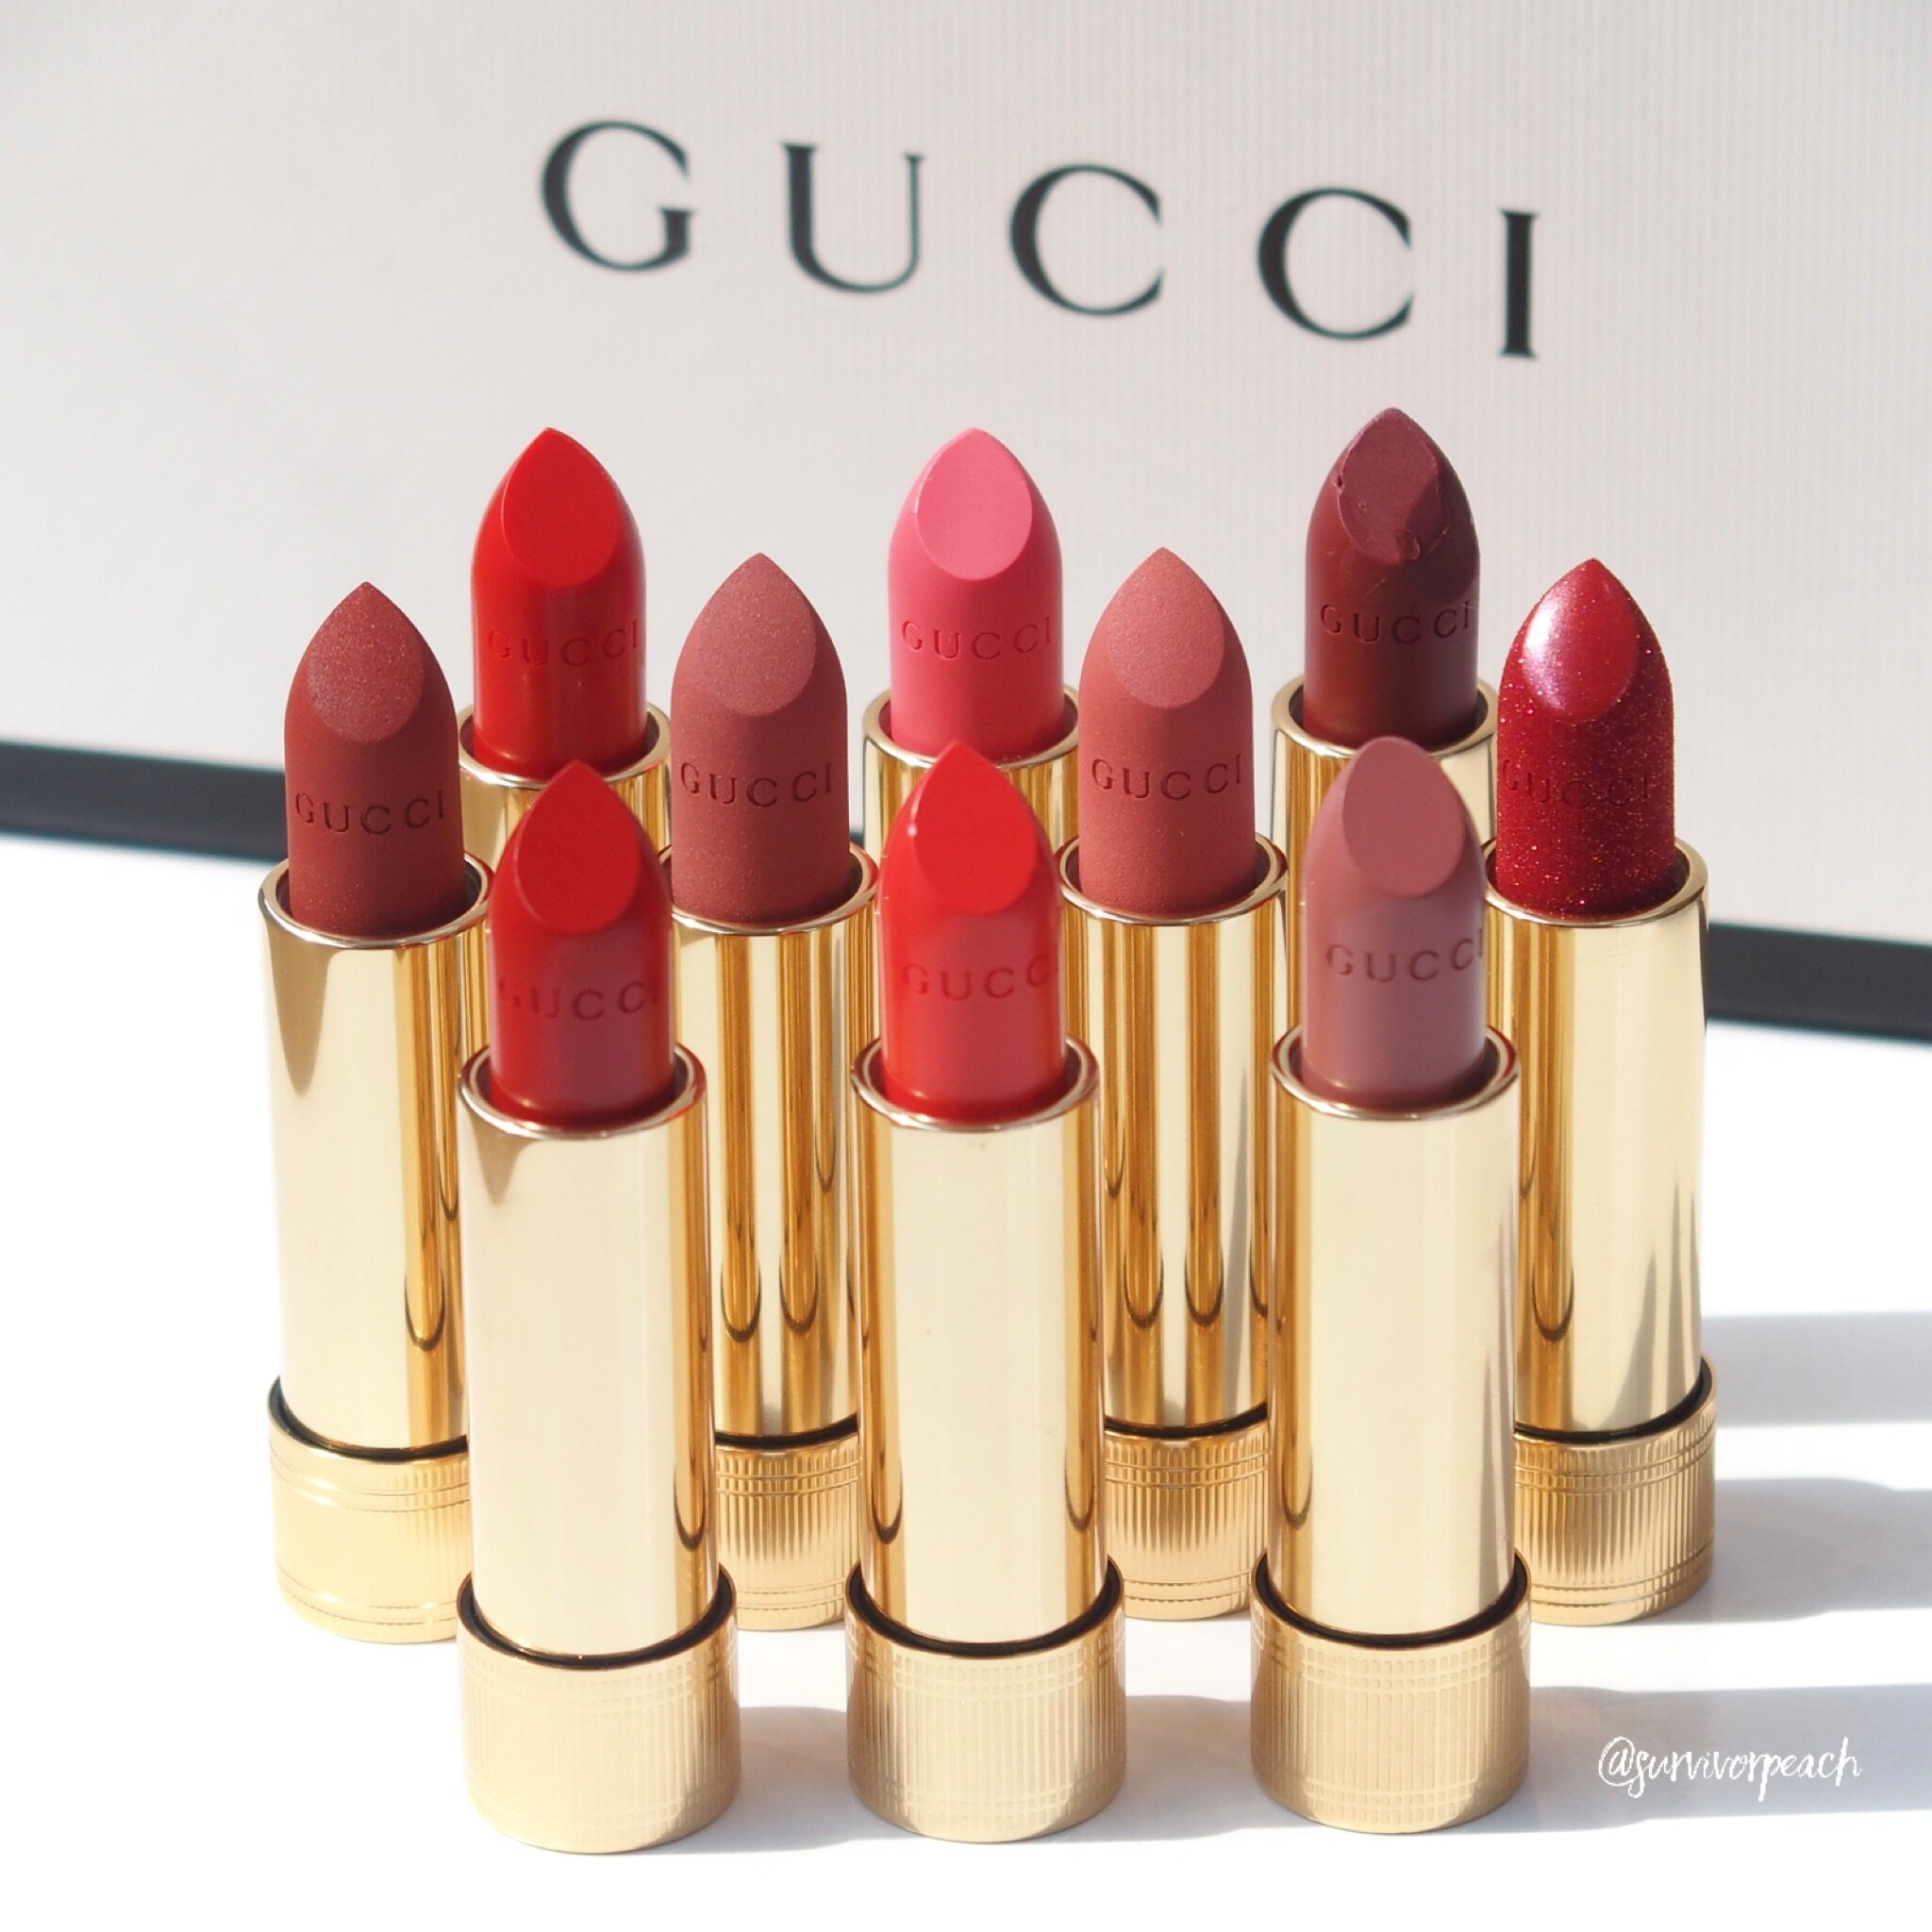 gucci lipstick collection